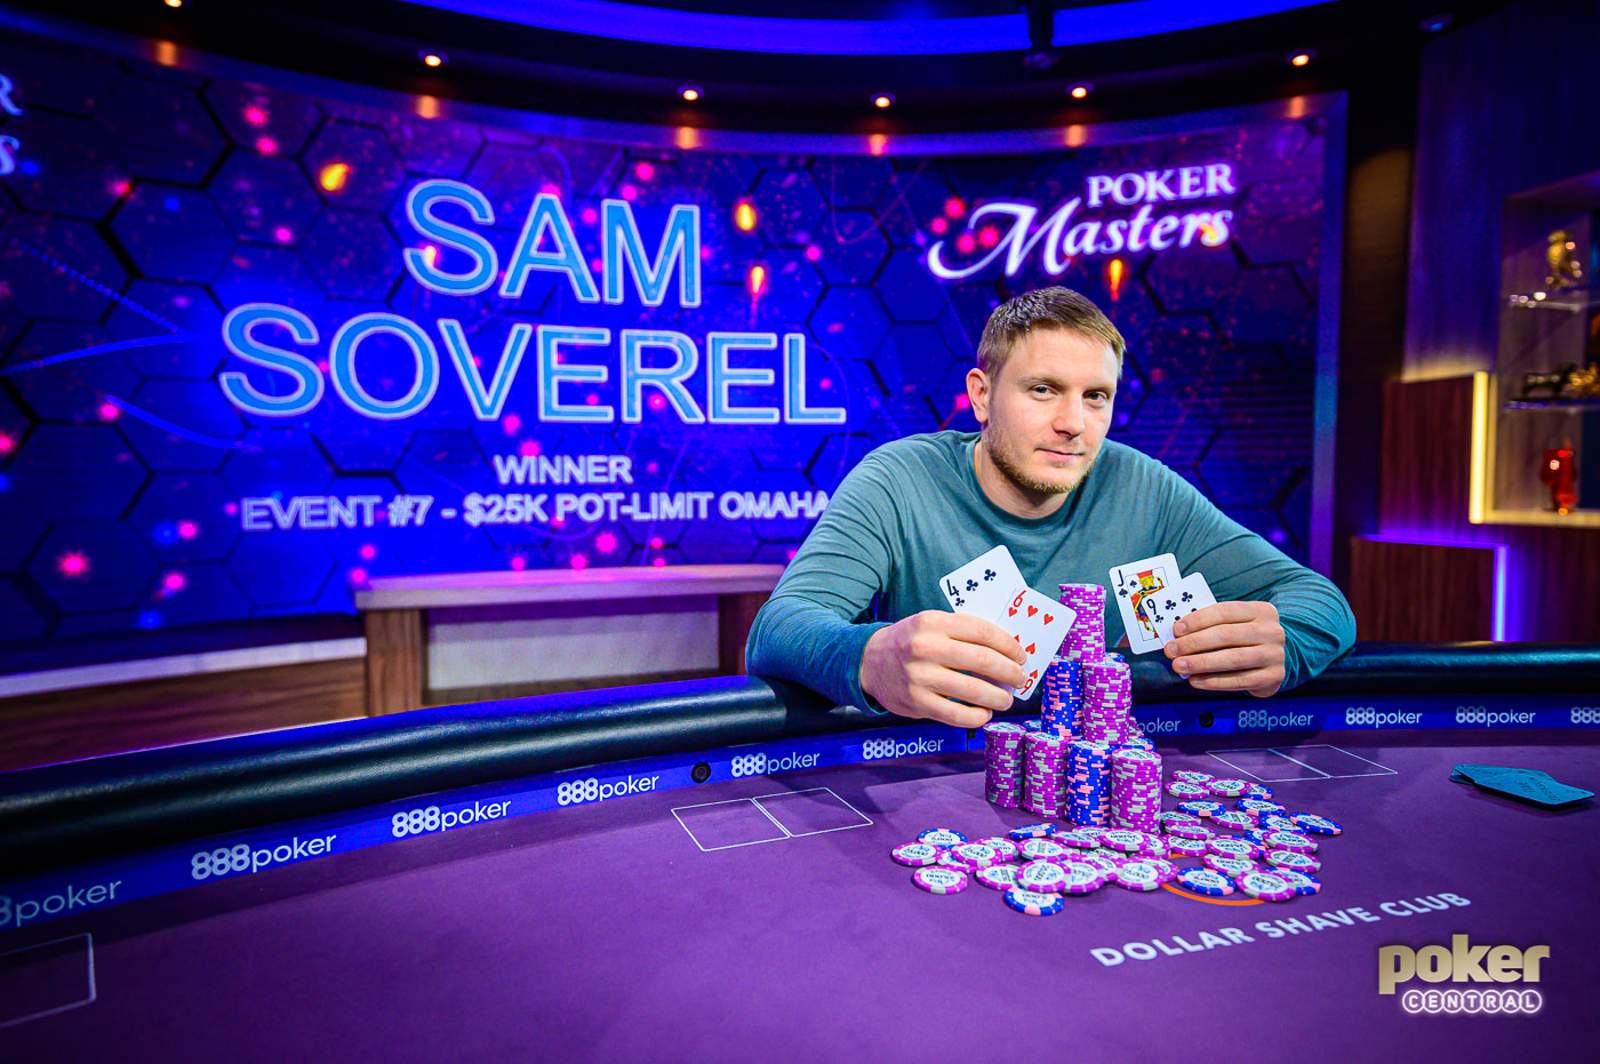 Sam Soverel Wins Poker Masters Event #7 for $340,000